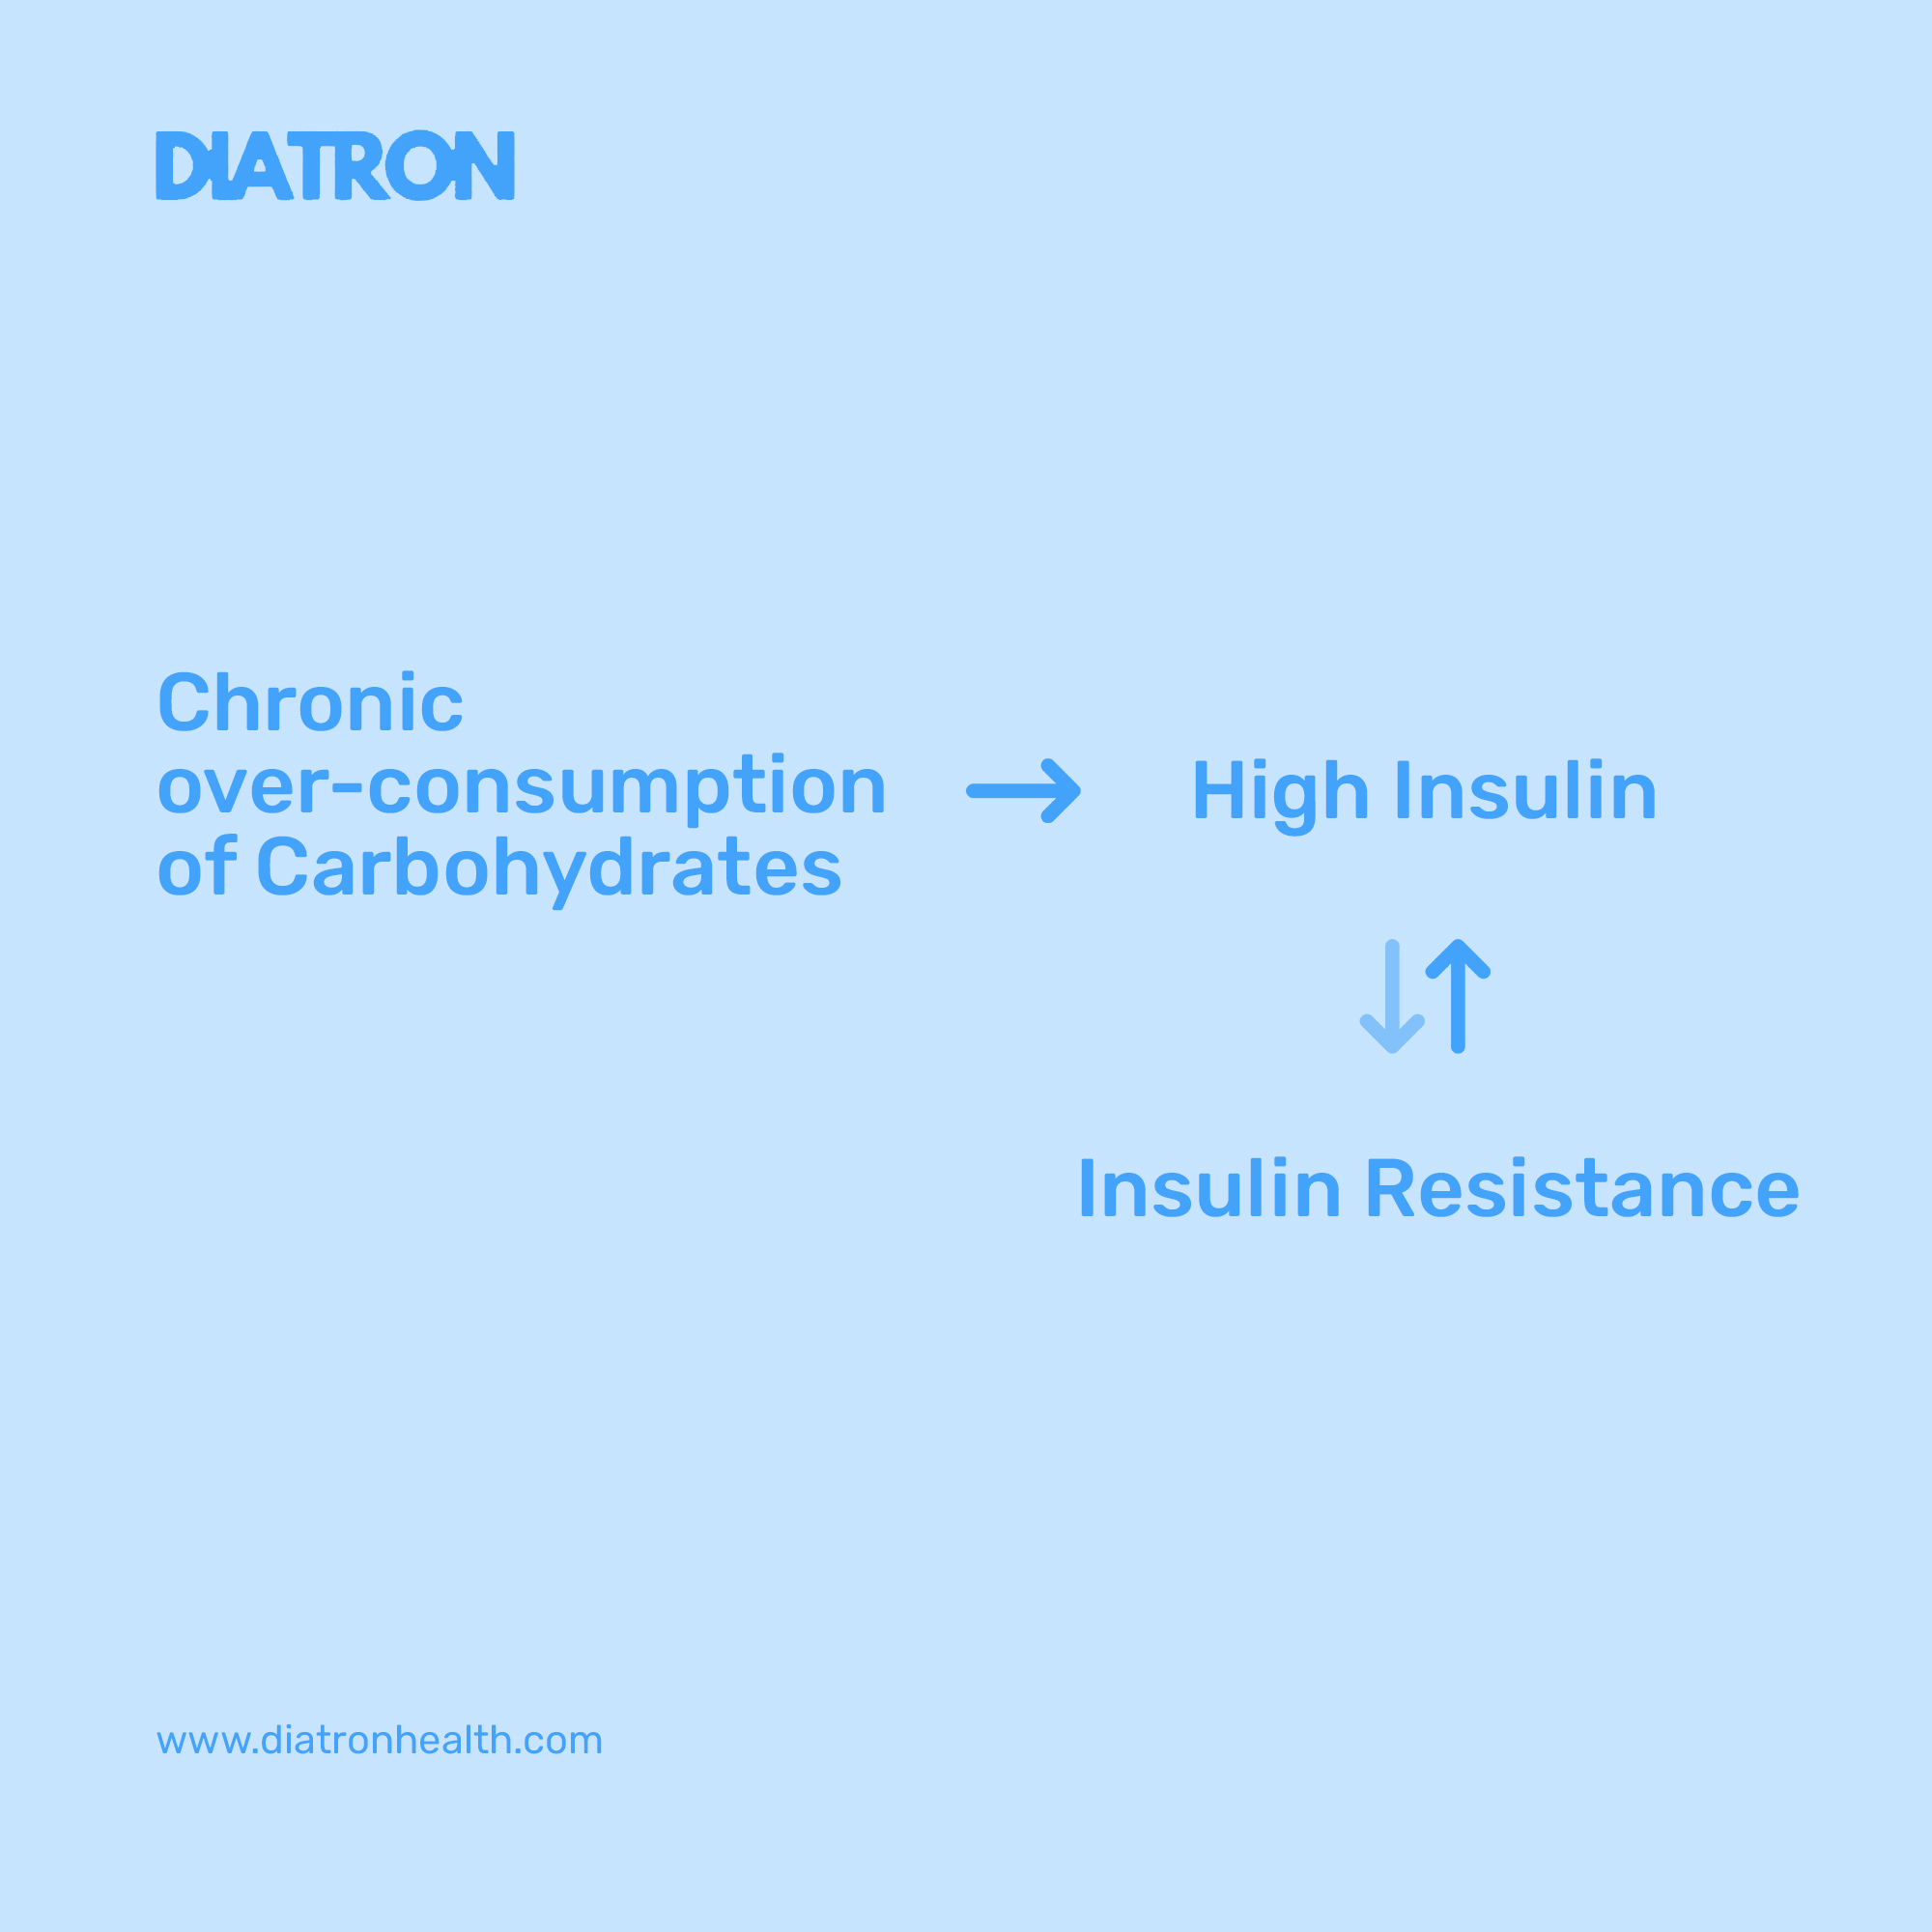 Diatron diabetes and genetics